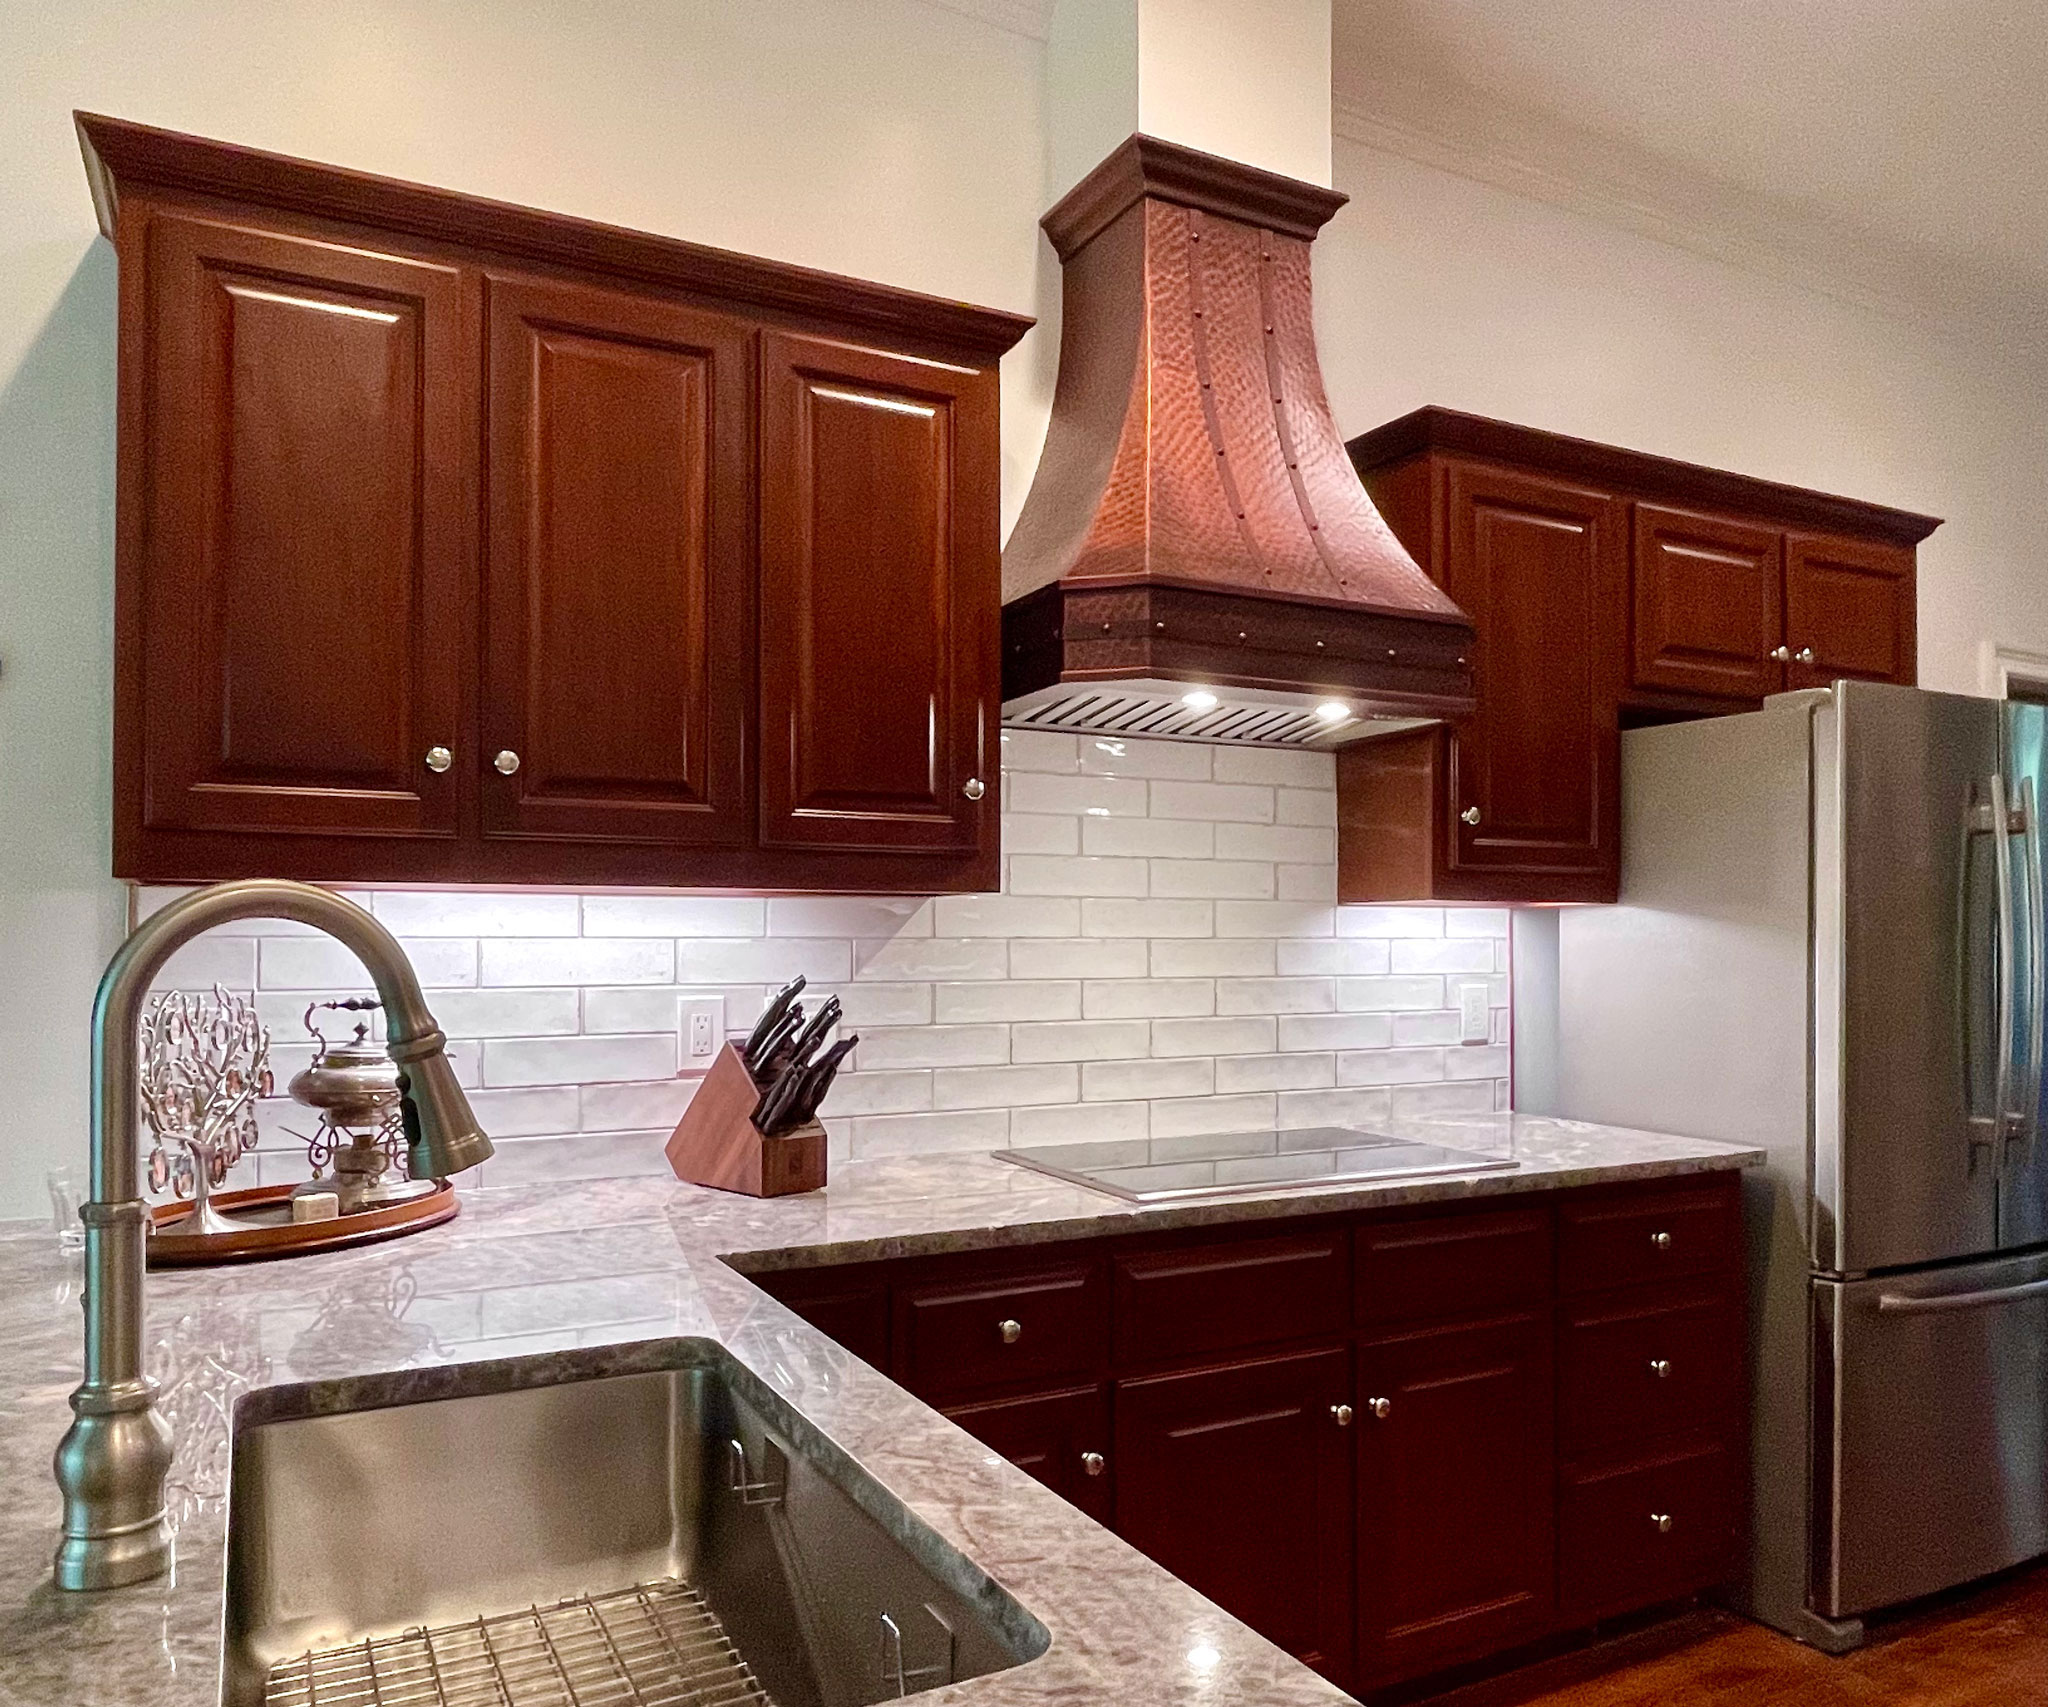 Copper range hood in kitchen with dark wood cabinets World CopperSmith